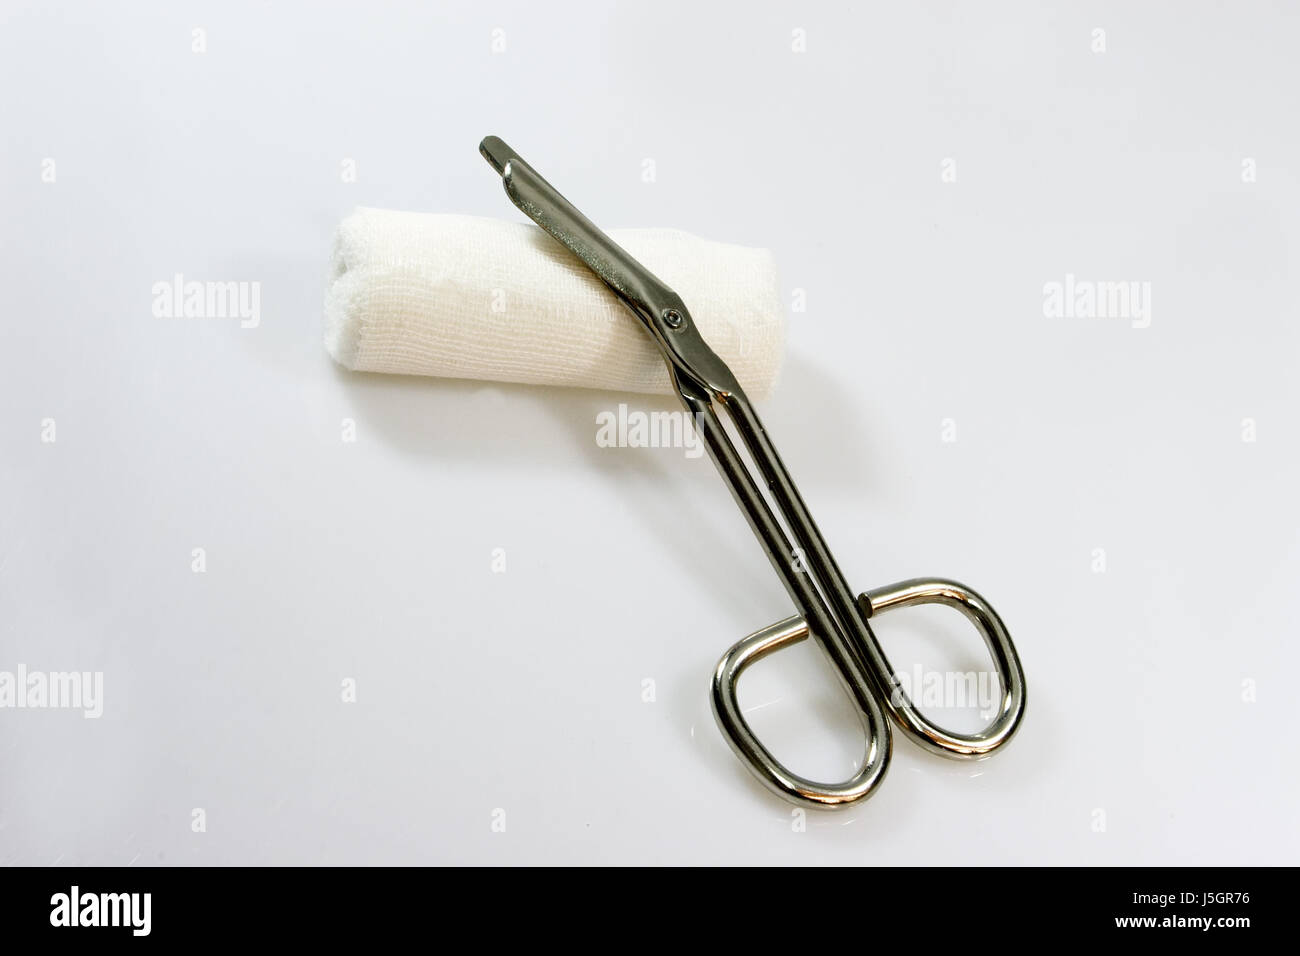 wound injury scissors scissor means agent medicine drug remedy substance supply Stock Photo